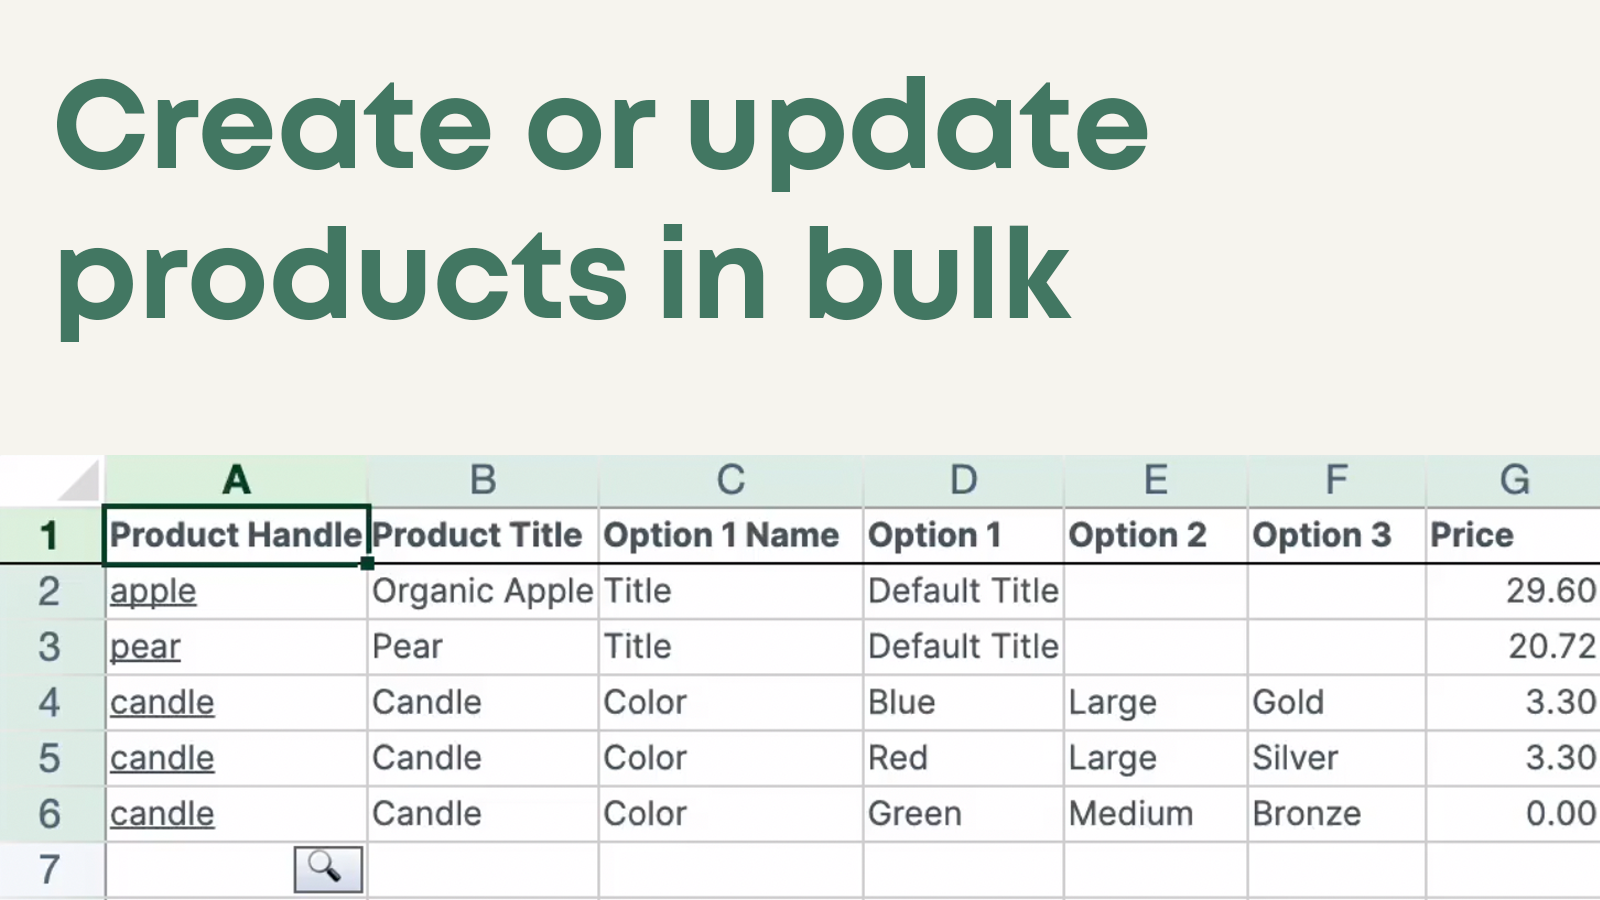 Create or update products in bulk